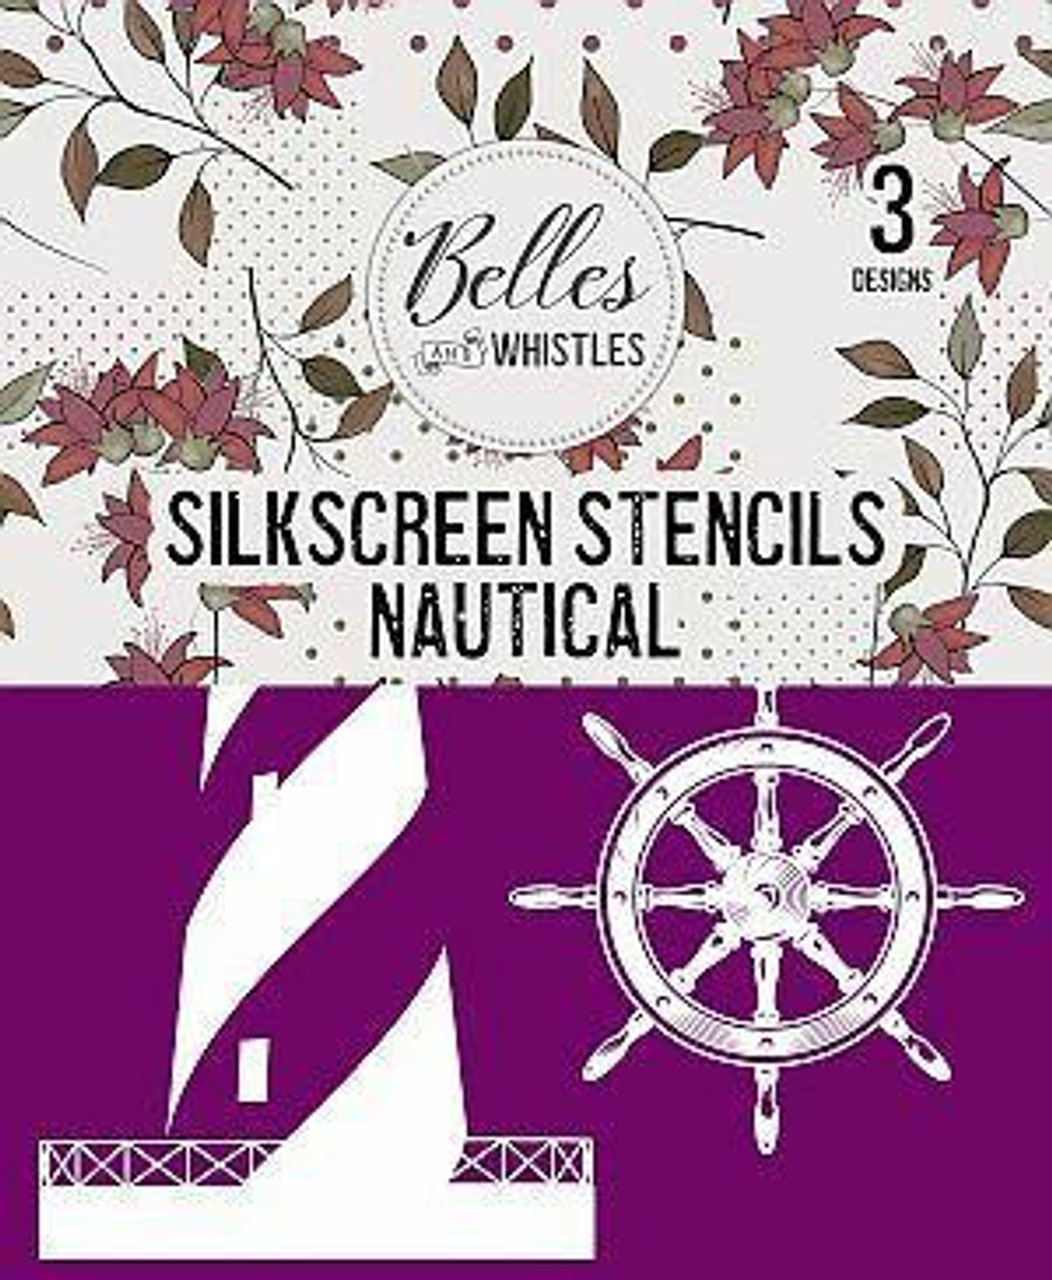 Nautical - Silkscreen Stencil - Dixie Belle Paint Company